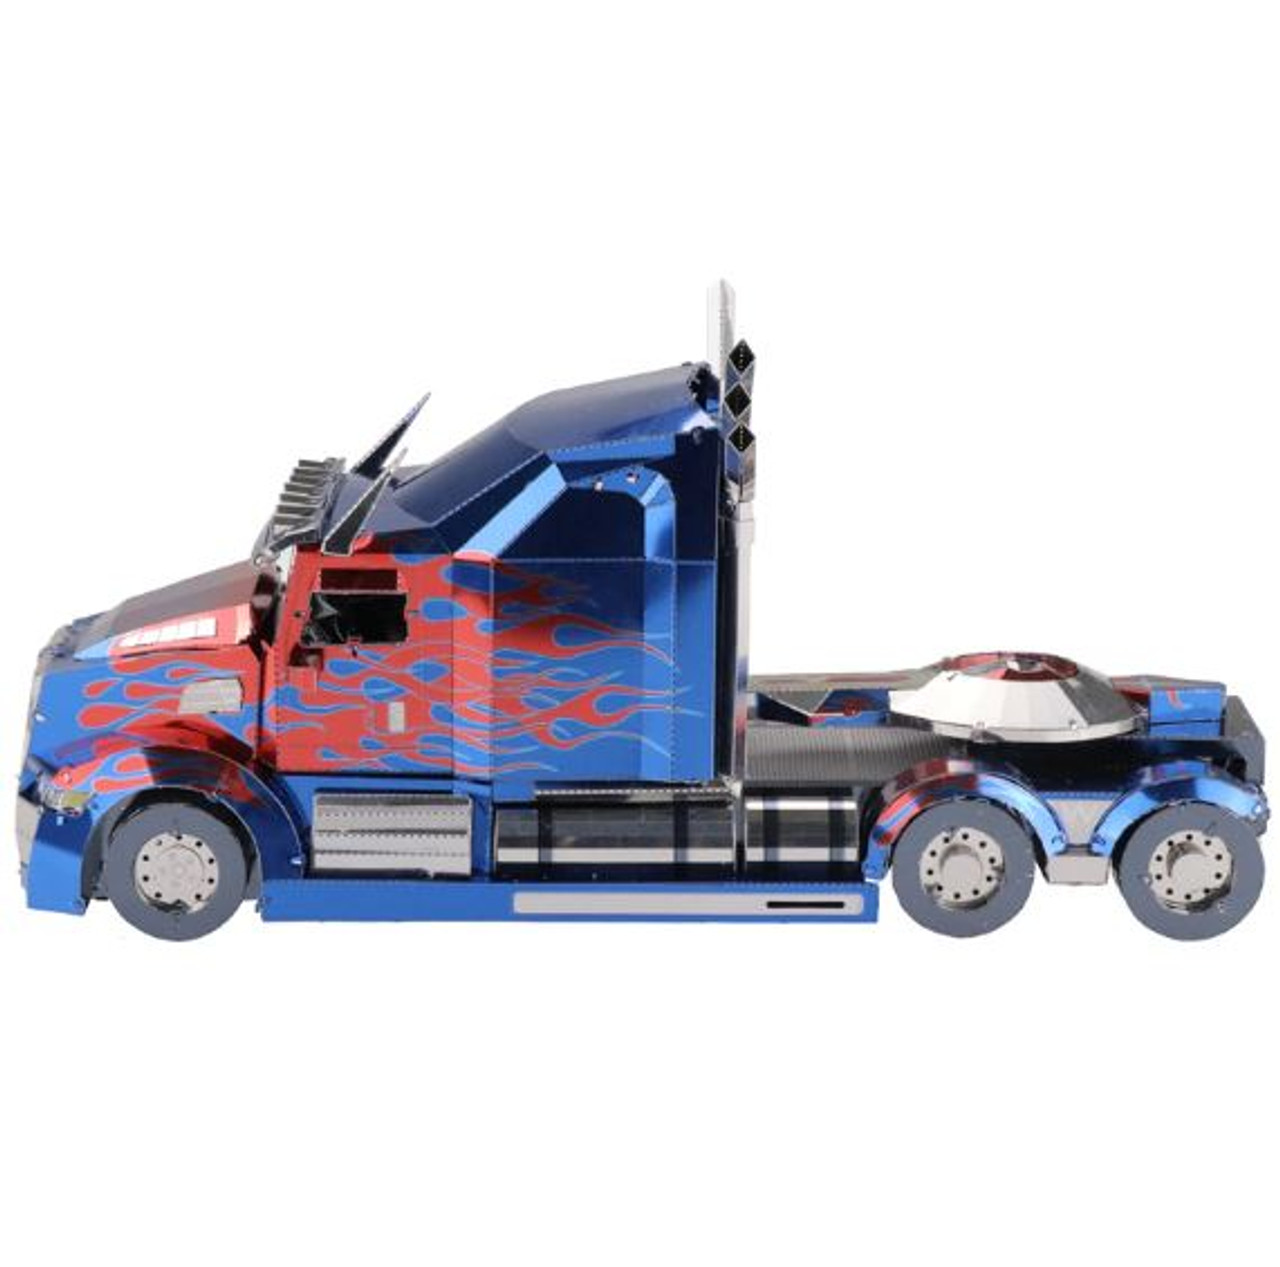 Fascinations ICONX Transformers Optimus Prime Western Star 5700 Truck 3D Metal Model Kit 